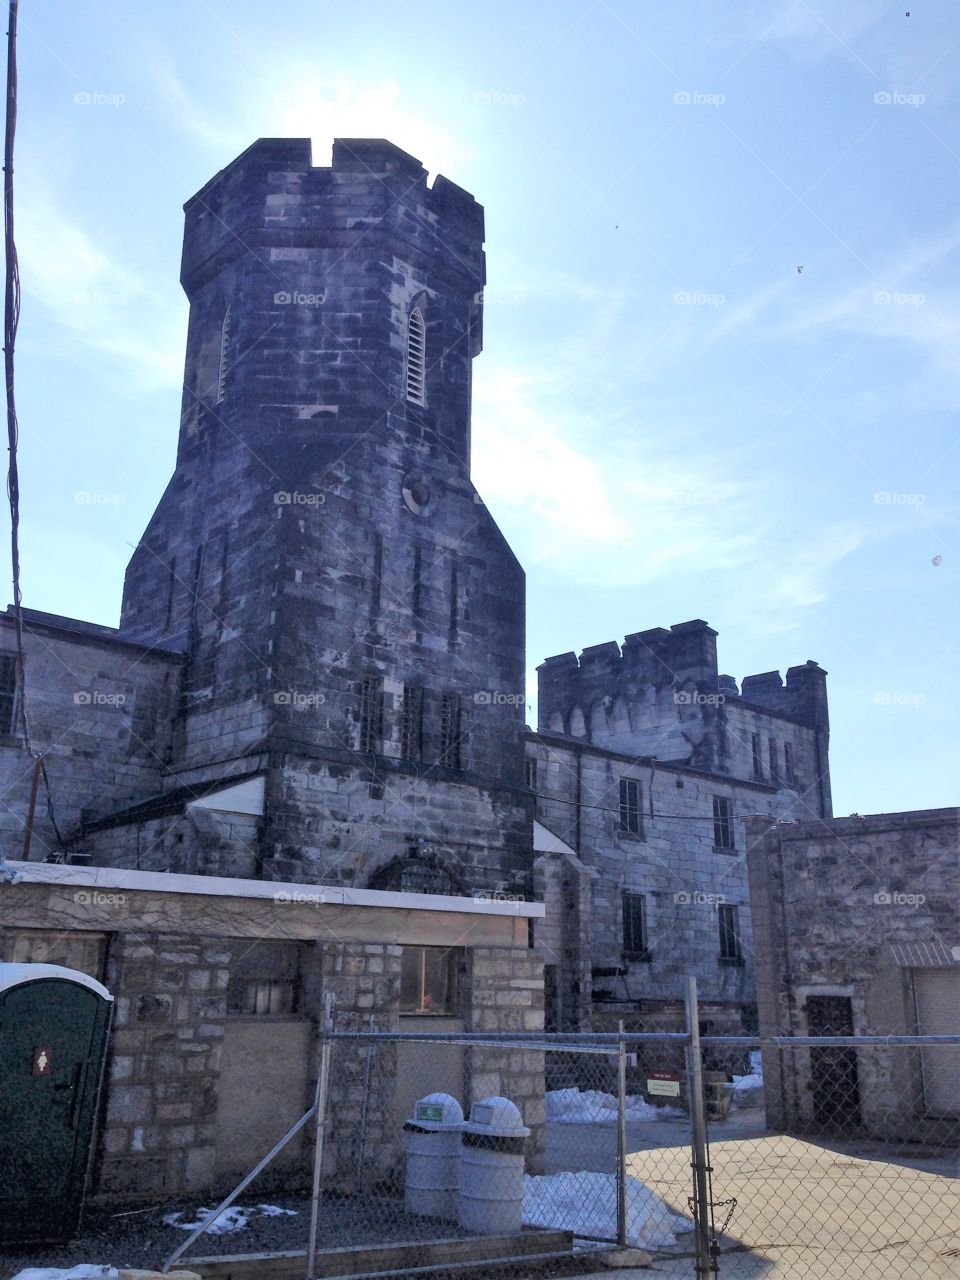 Eastern State penitentiary Philadelphia, Pennsylvania